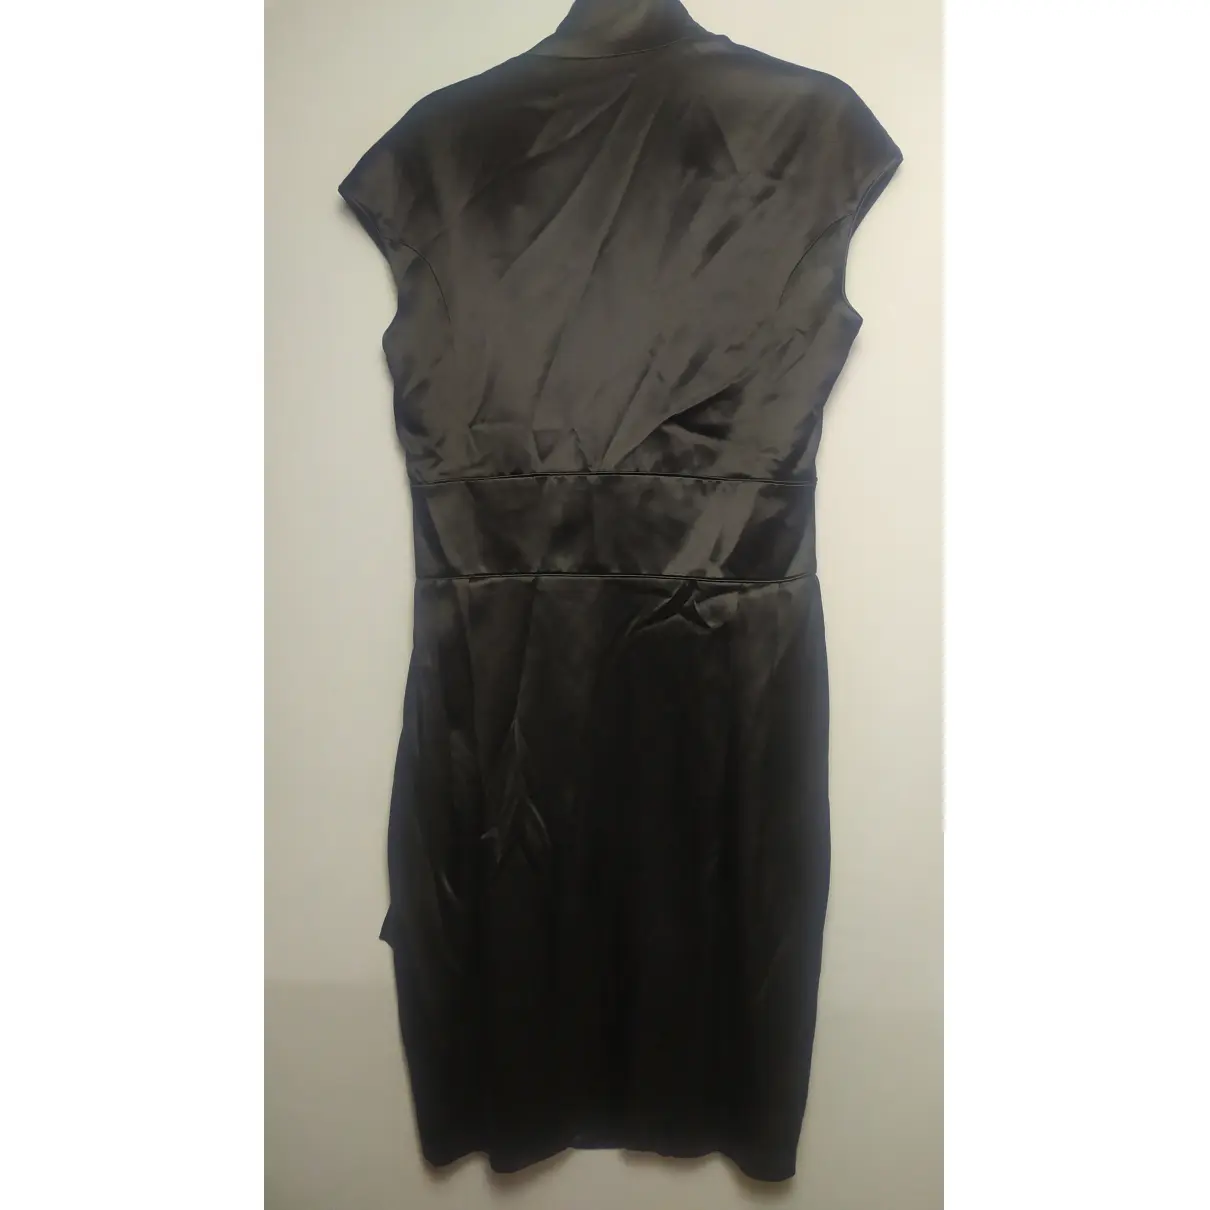 Buy Les Hommes Silk mid-length dress online